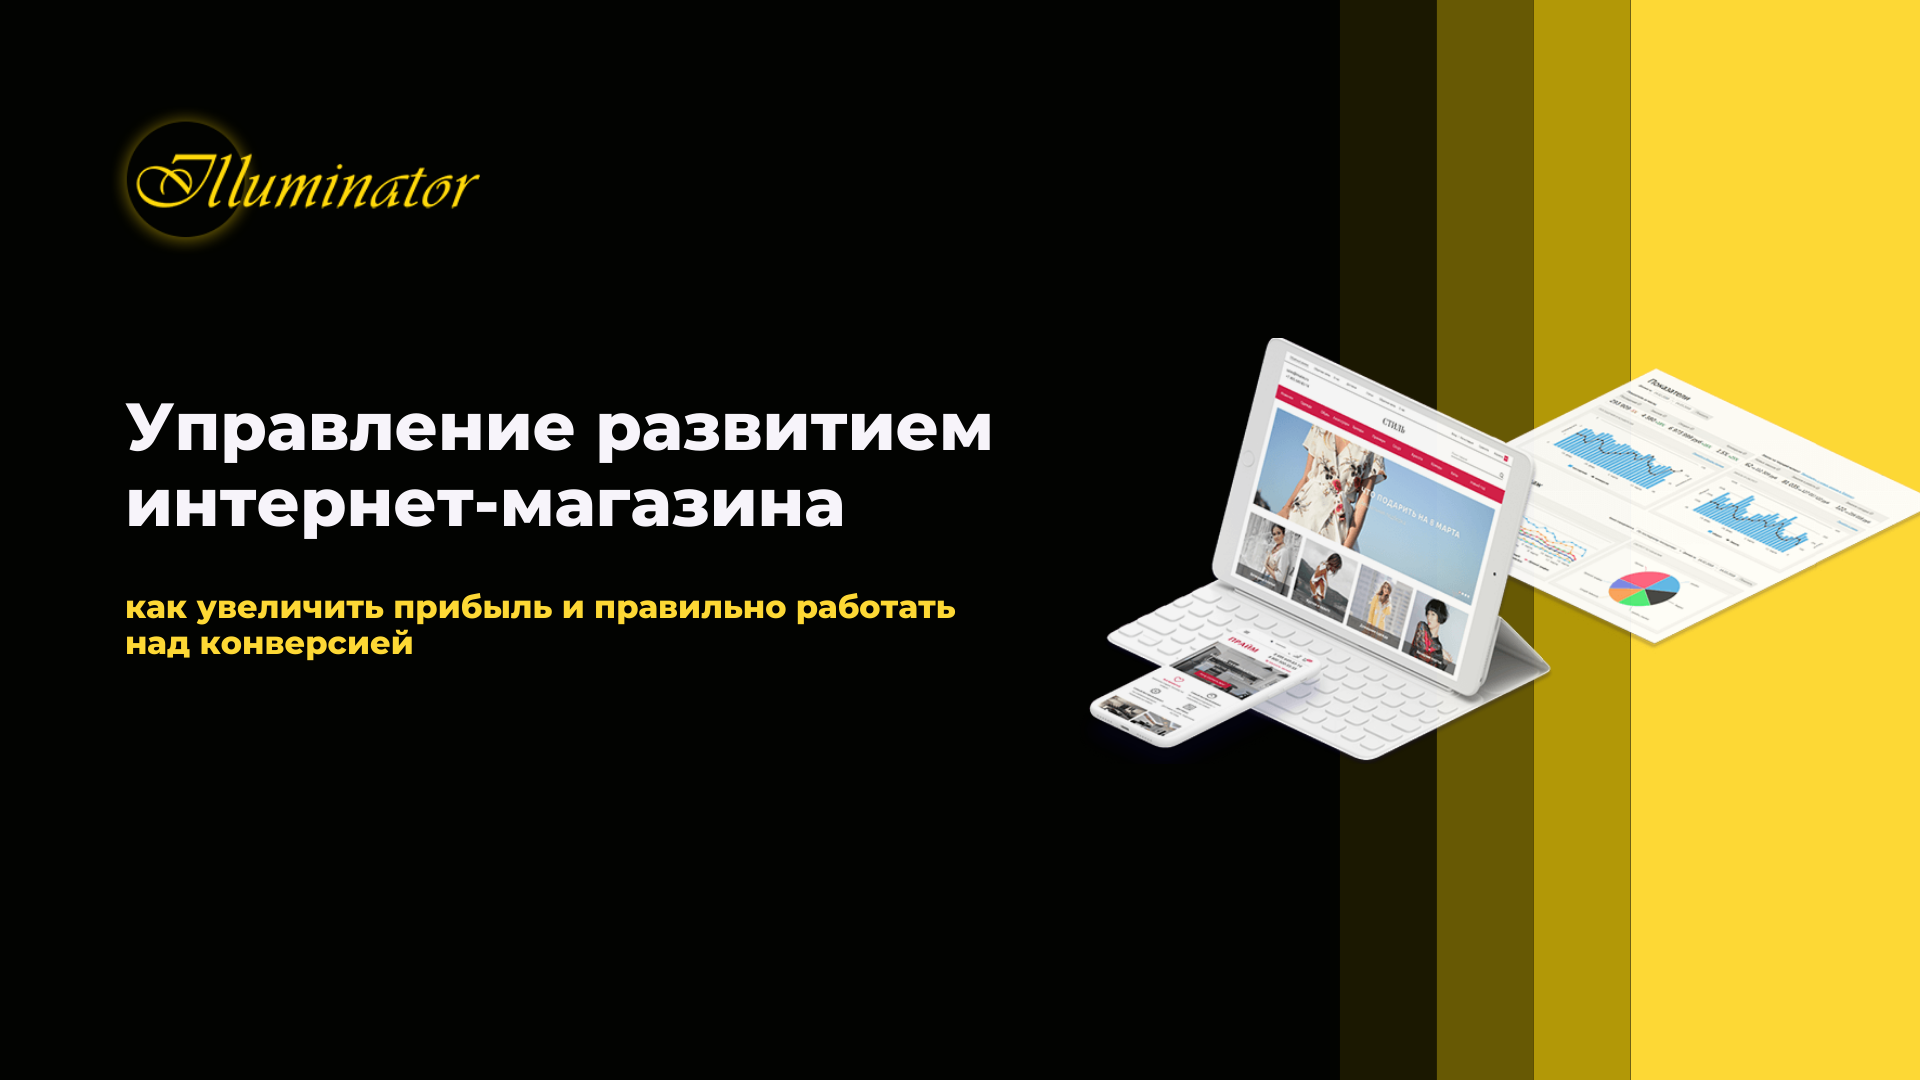 Презентация: Управление развитием интернет-магазина